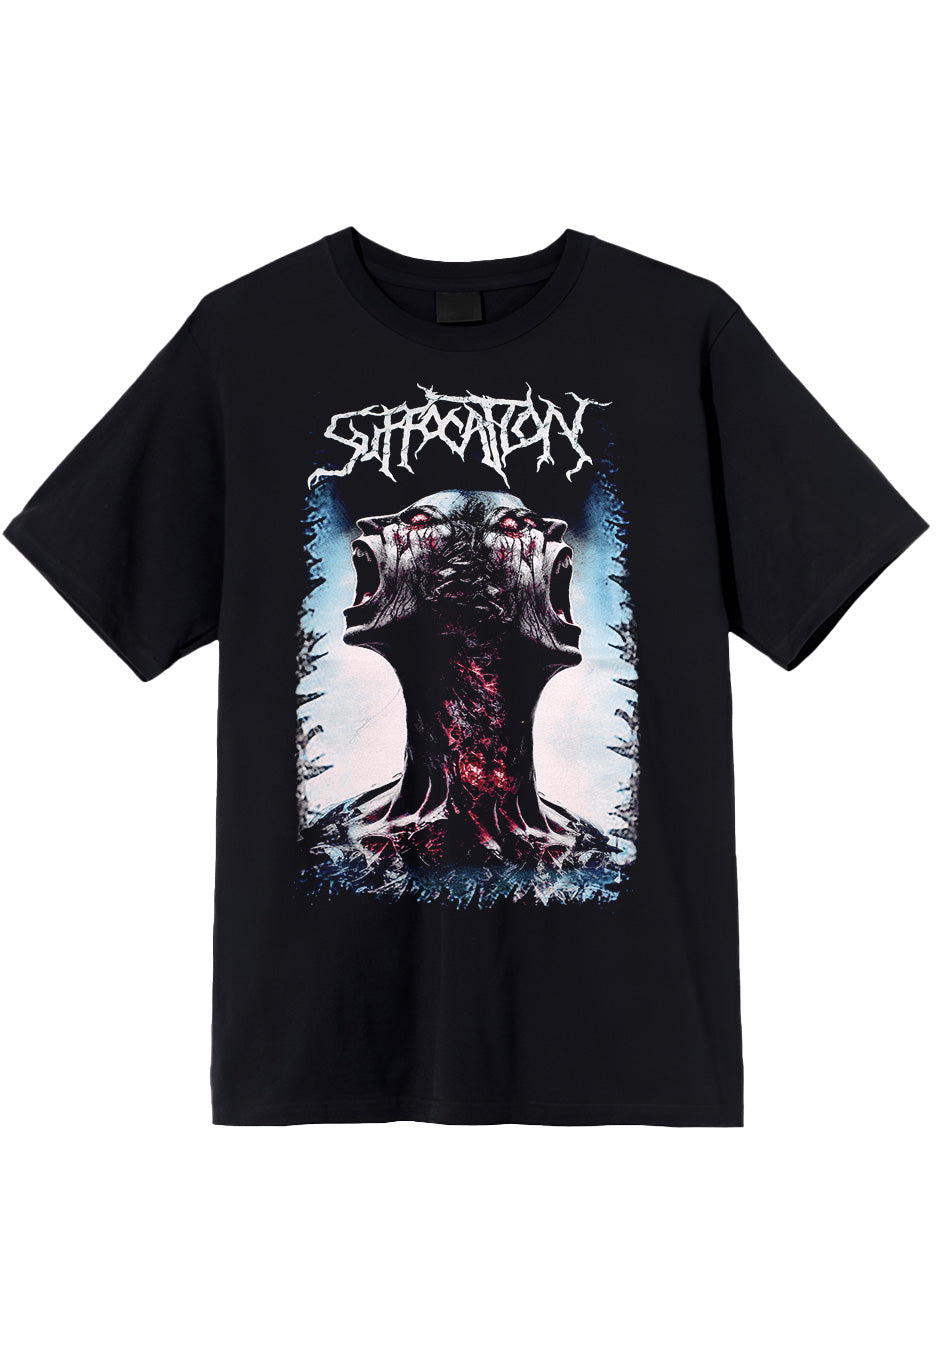 Suffocation - Screams - T-Shirt